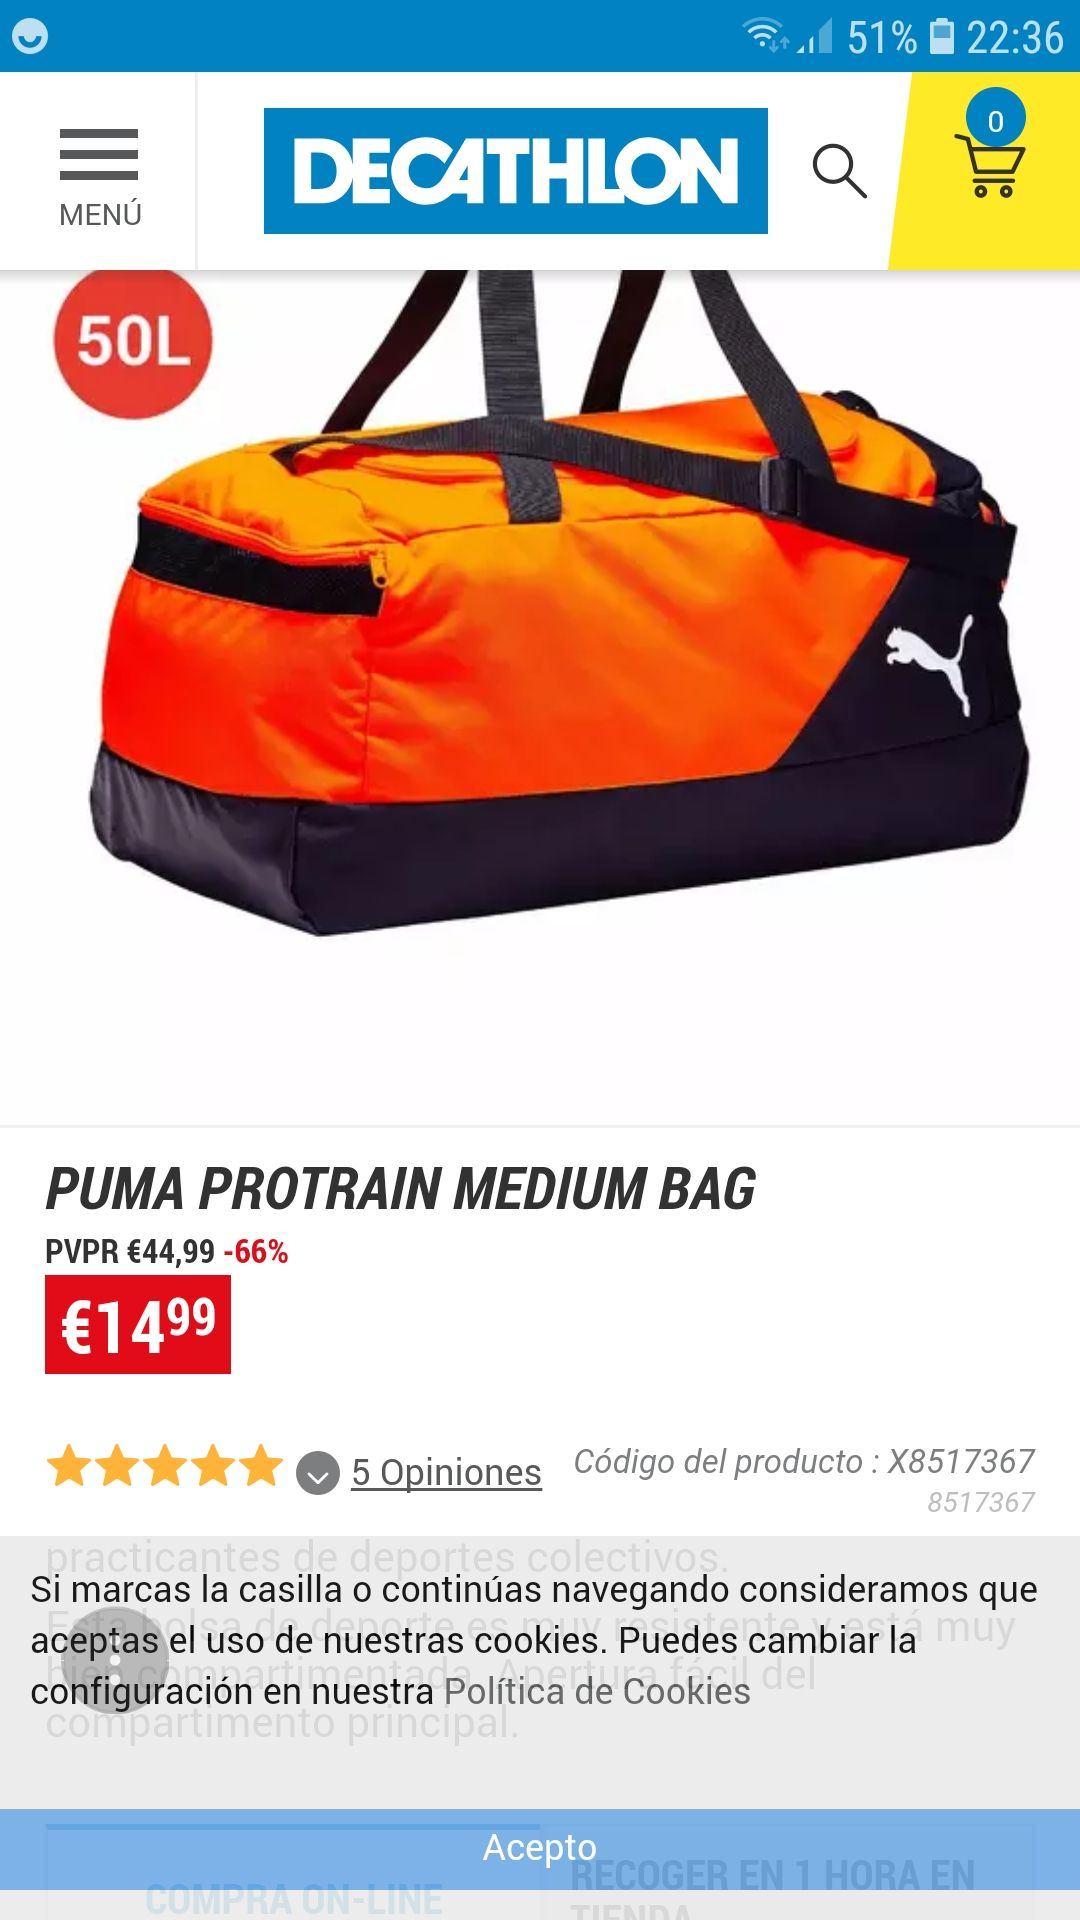 puma protrain medium bag